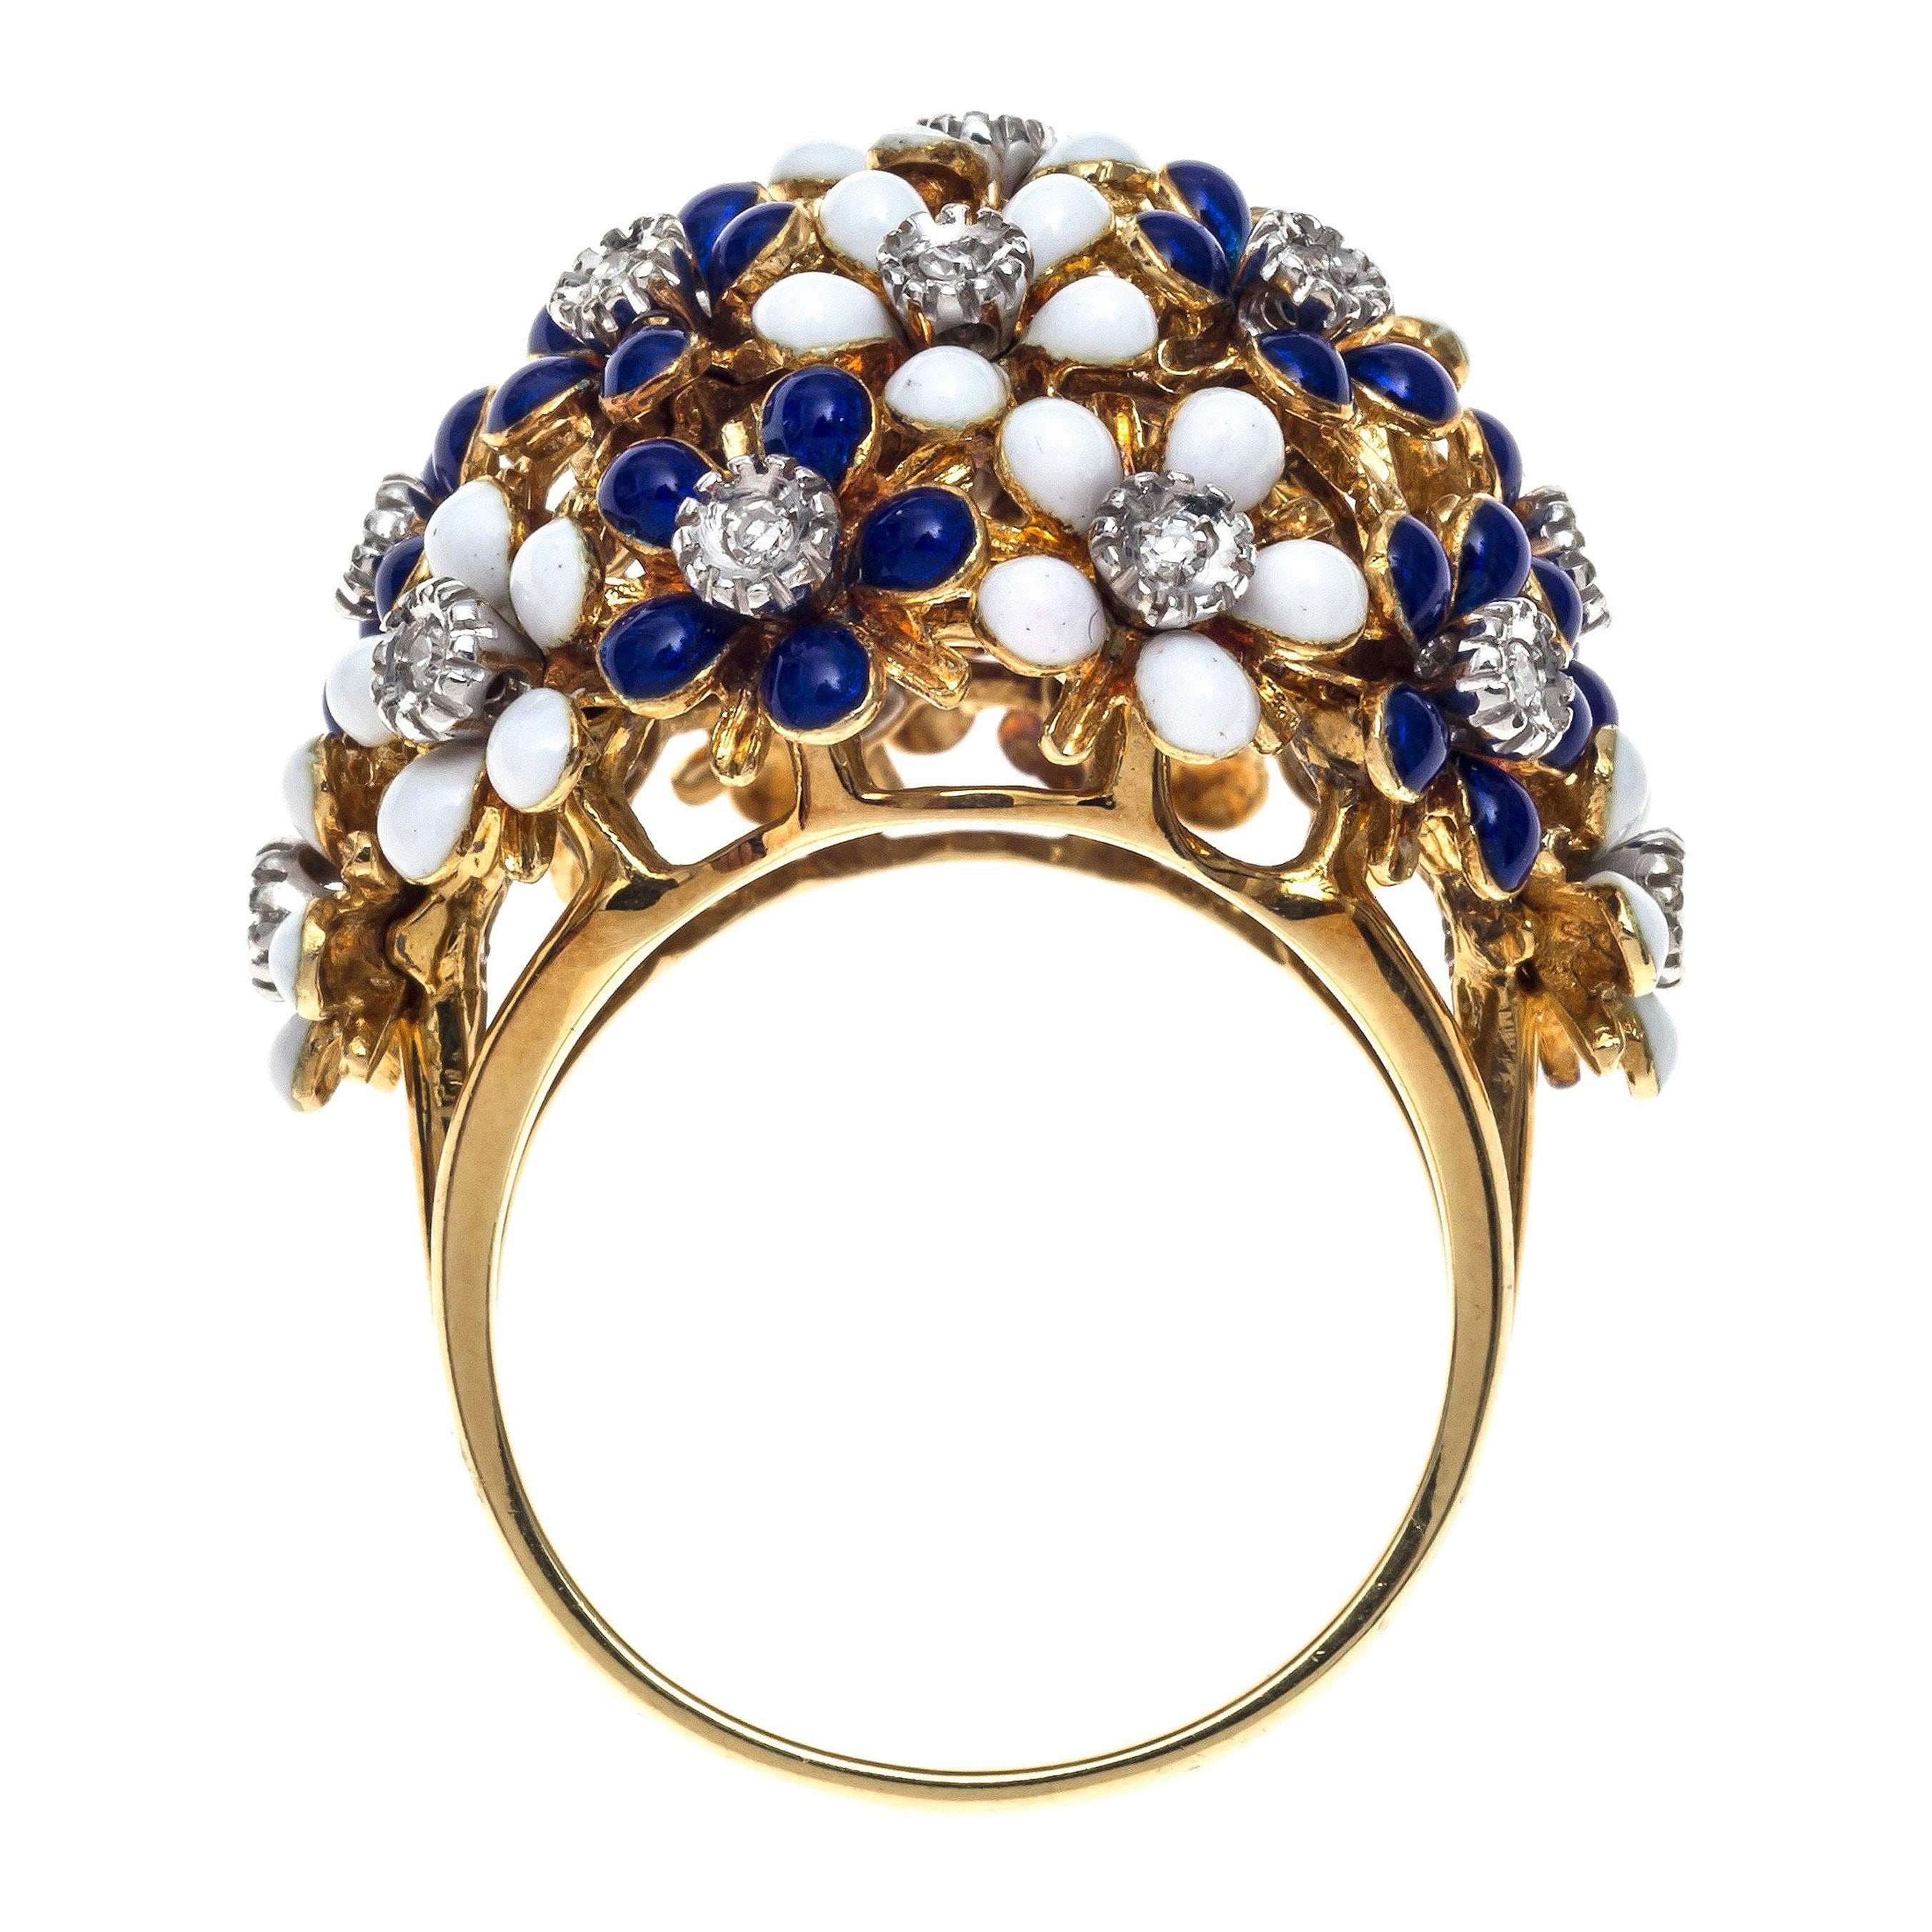 Vintage 18 Kt Gold Dome Shaped Cocktail Ring Blue White Enamel Flowers Diamond